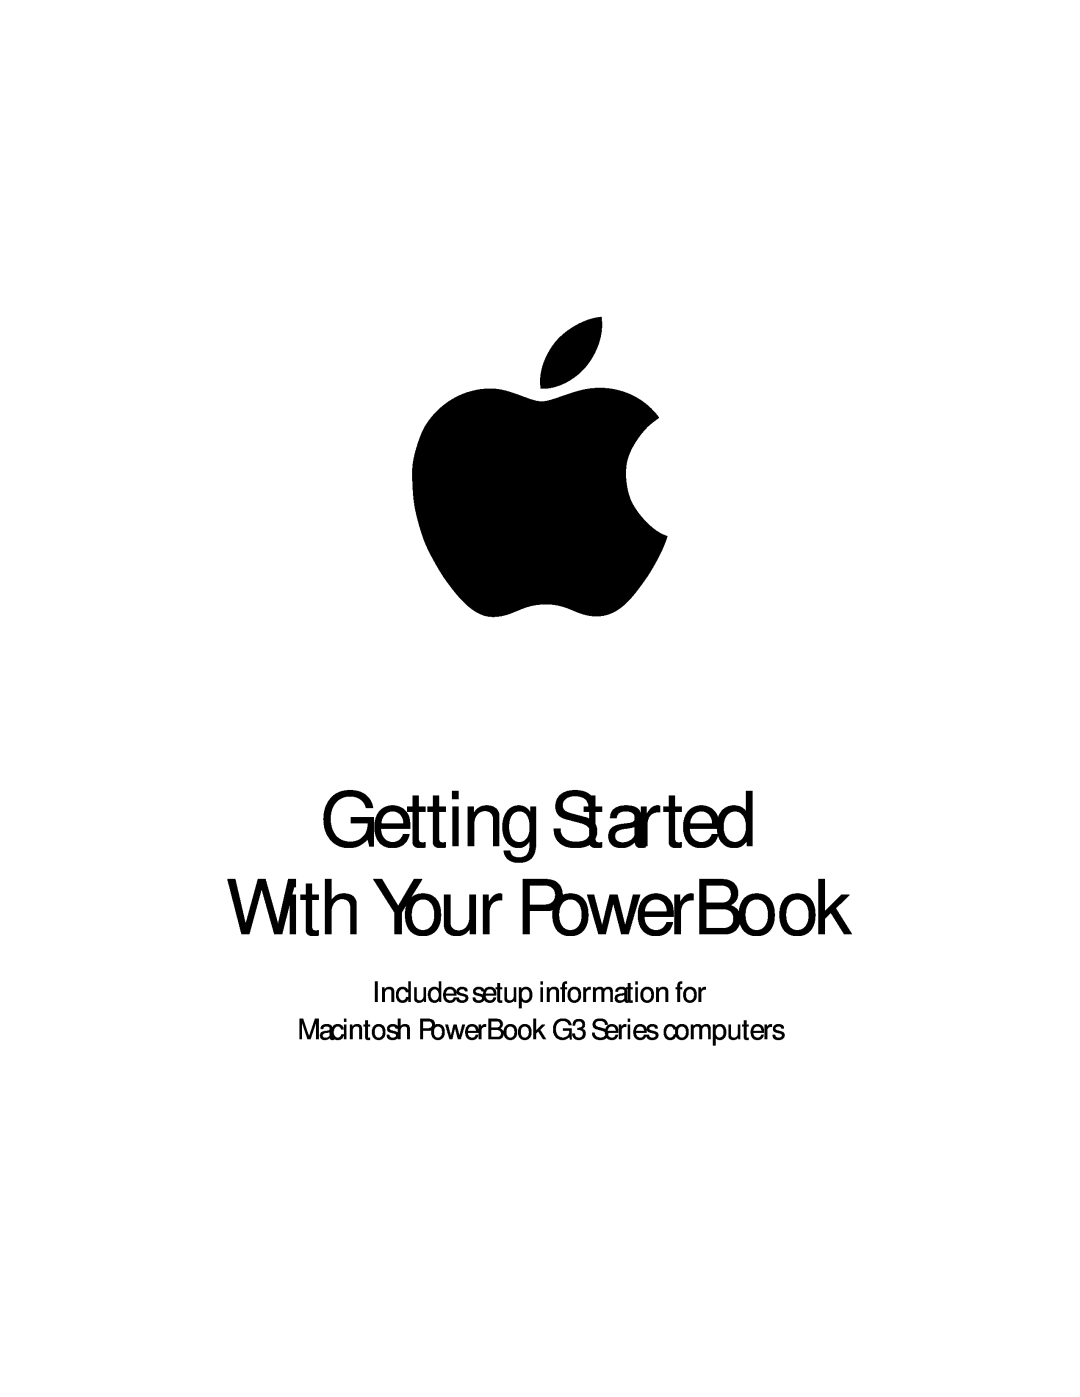 Apple 3400C/200 manual PowerBook 3400c/ PowerBook G3, K Service Source, PowerBook 3400c/180, 3400c/200, and PowerBook G3 